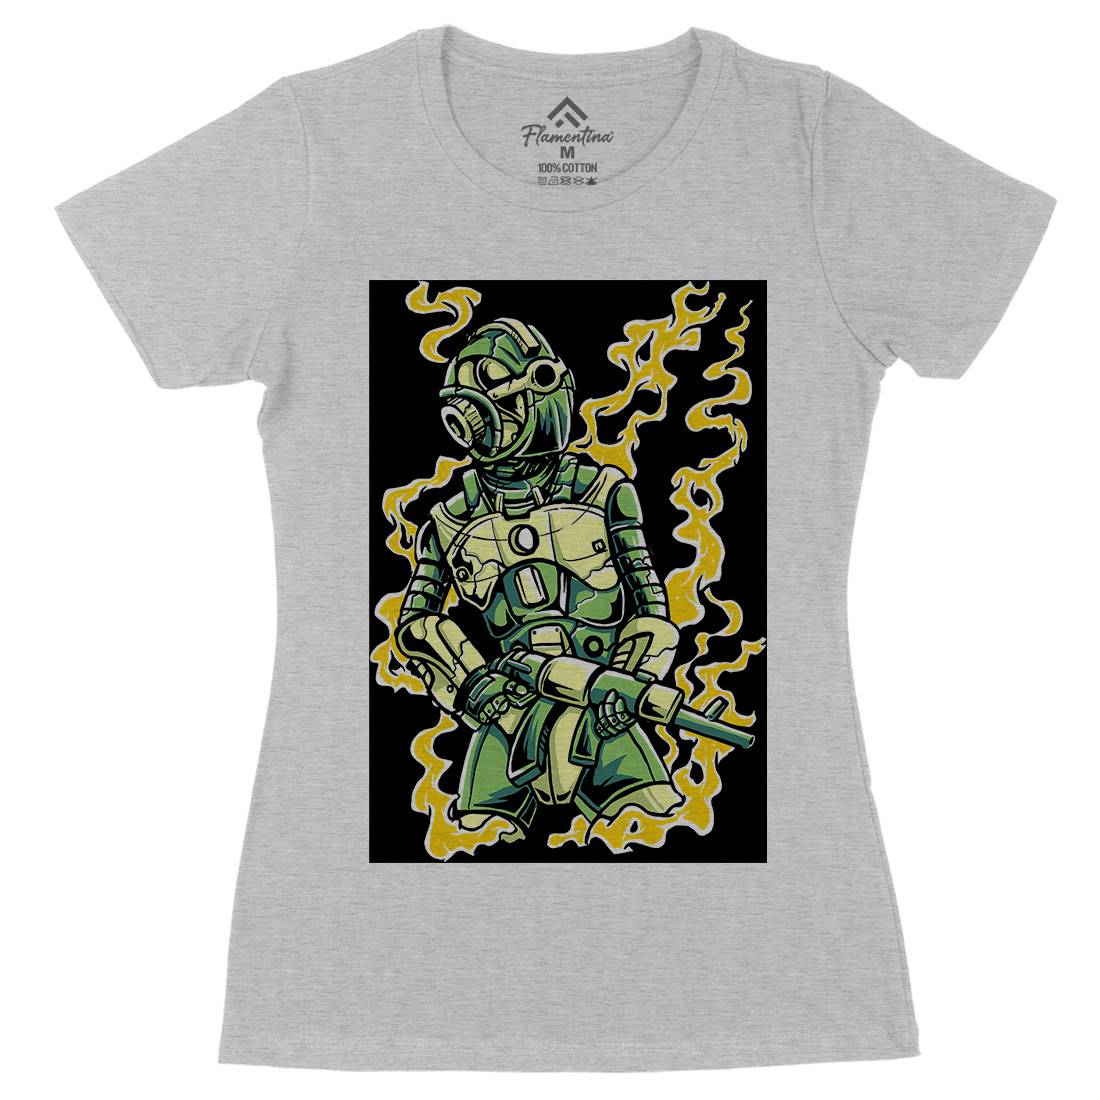 Robot Soldier Womens Organic Crew Neck T-Shirt Space A565